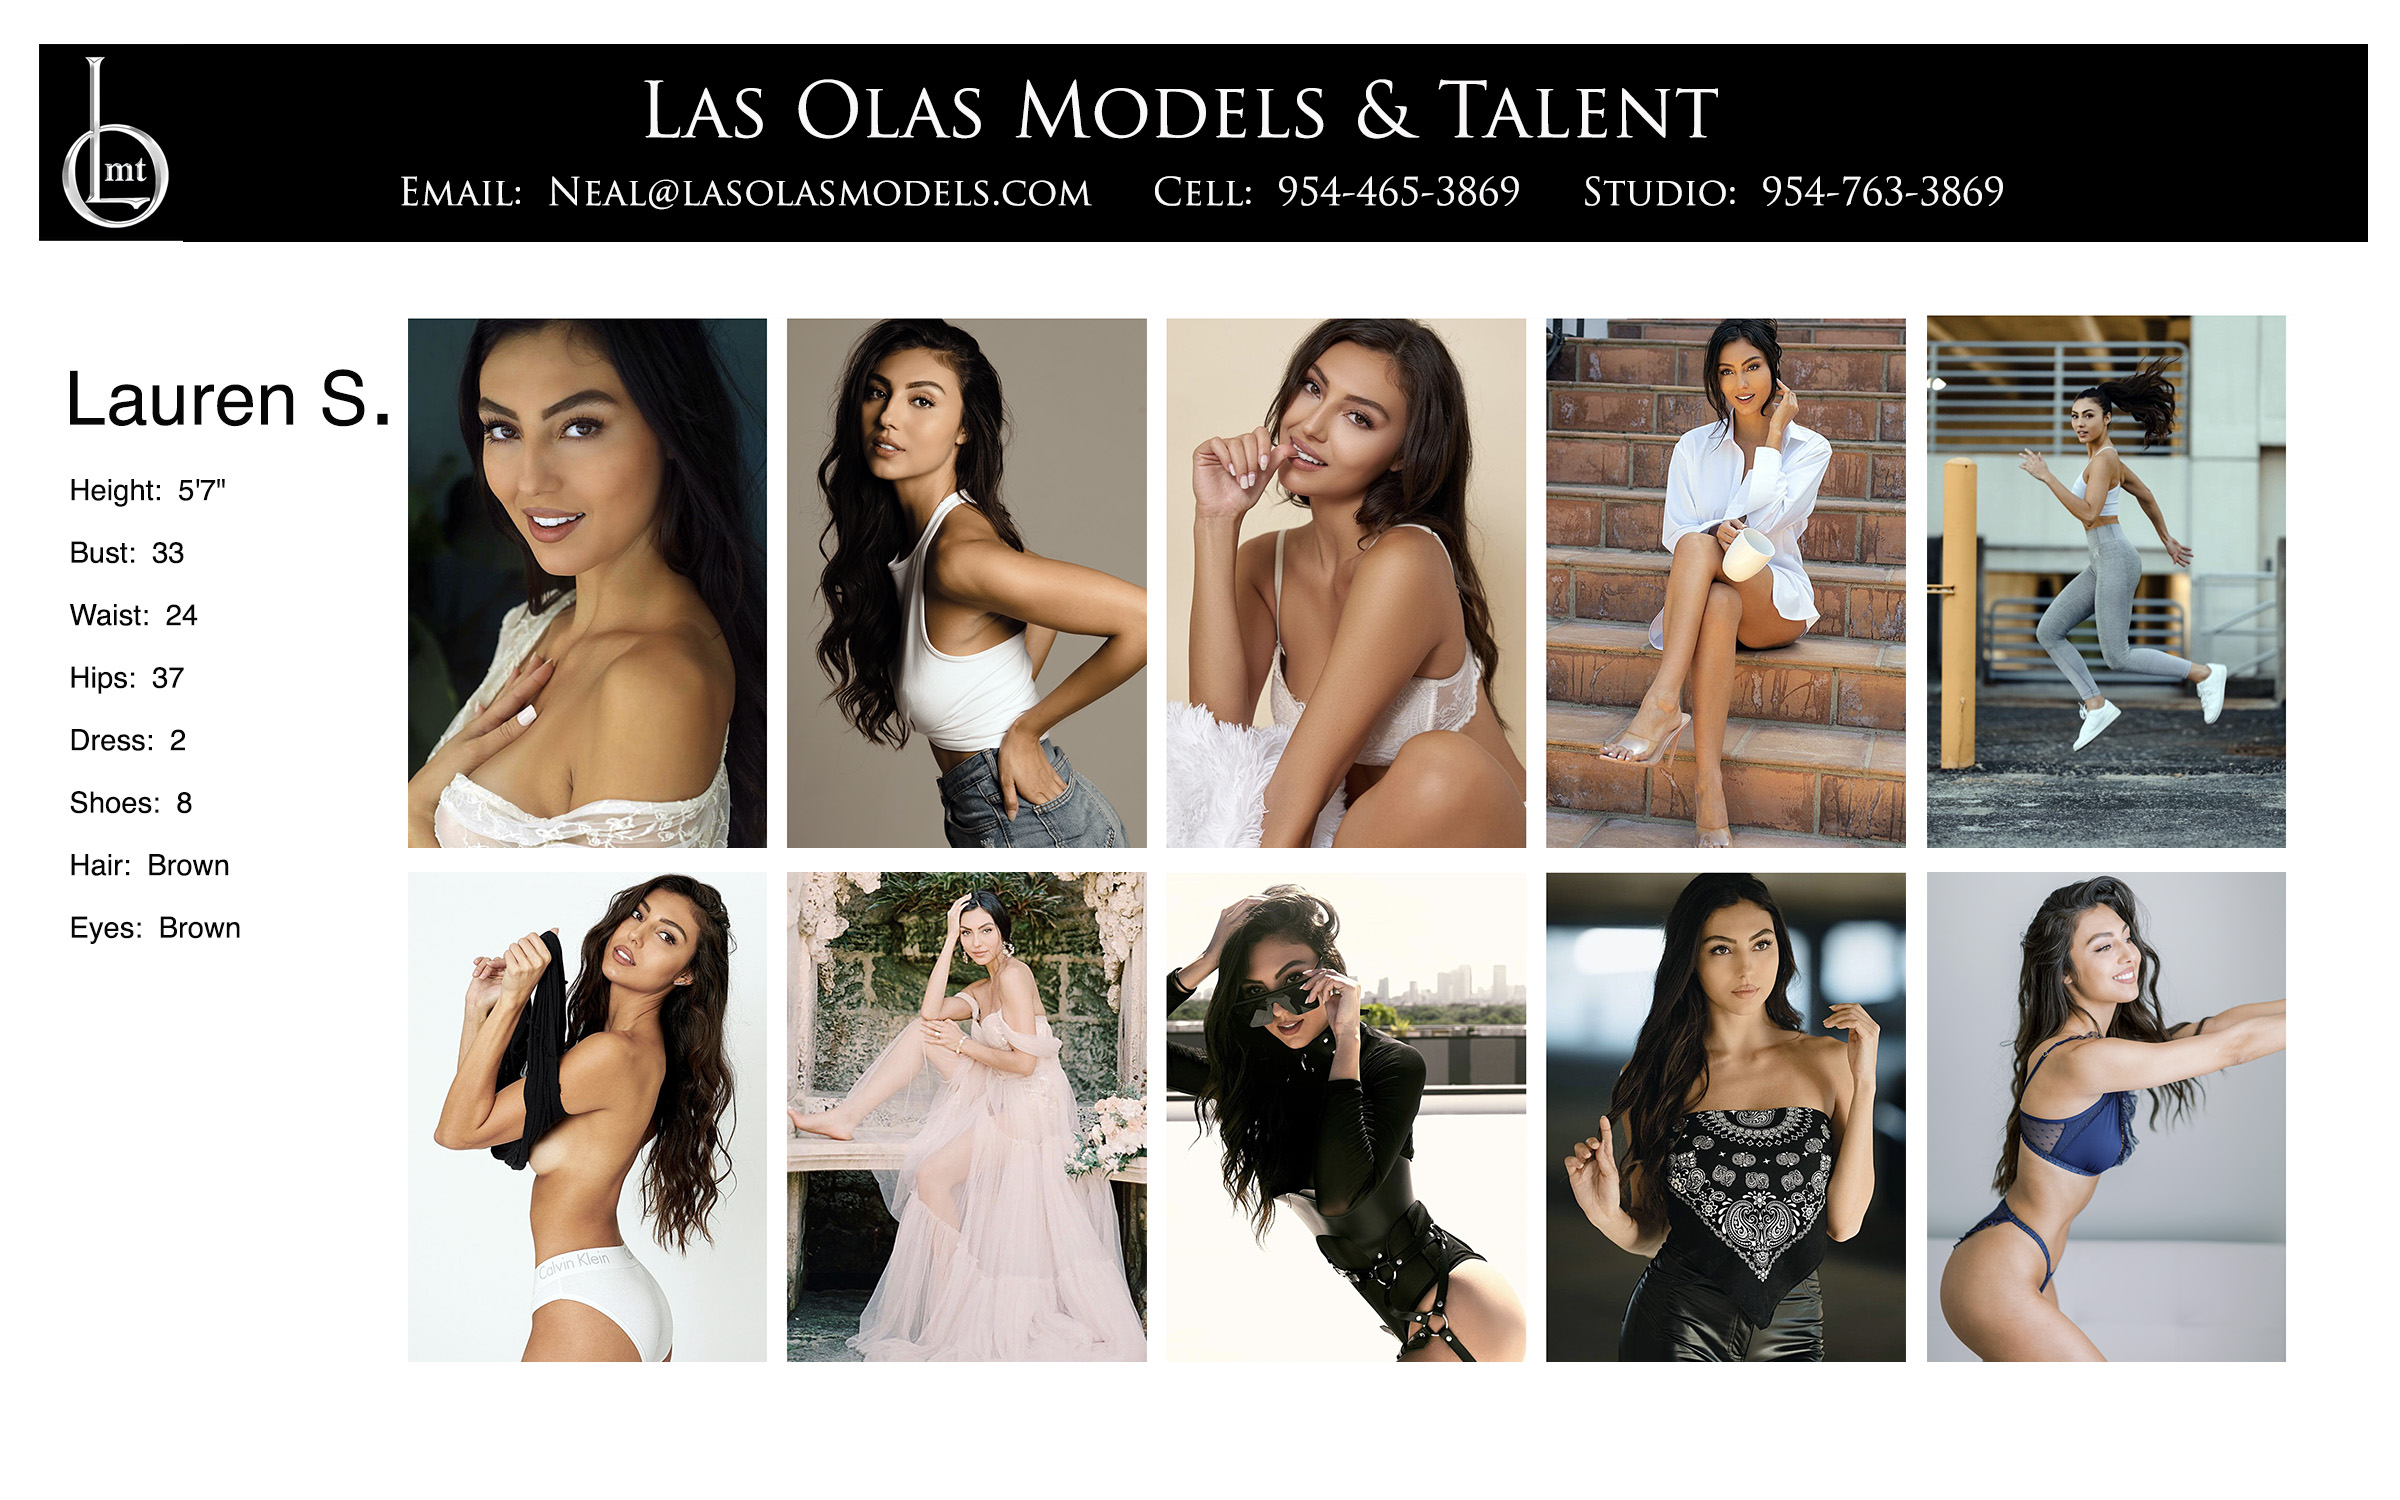 Models Fort Lauderdale Miami South Florida - Print Video Commercial Catalog - Las Olas Models & Talent - Lauren S Comp